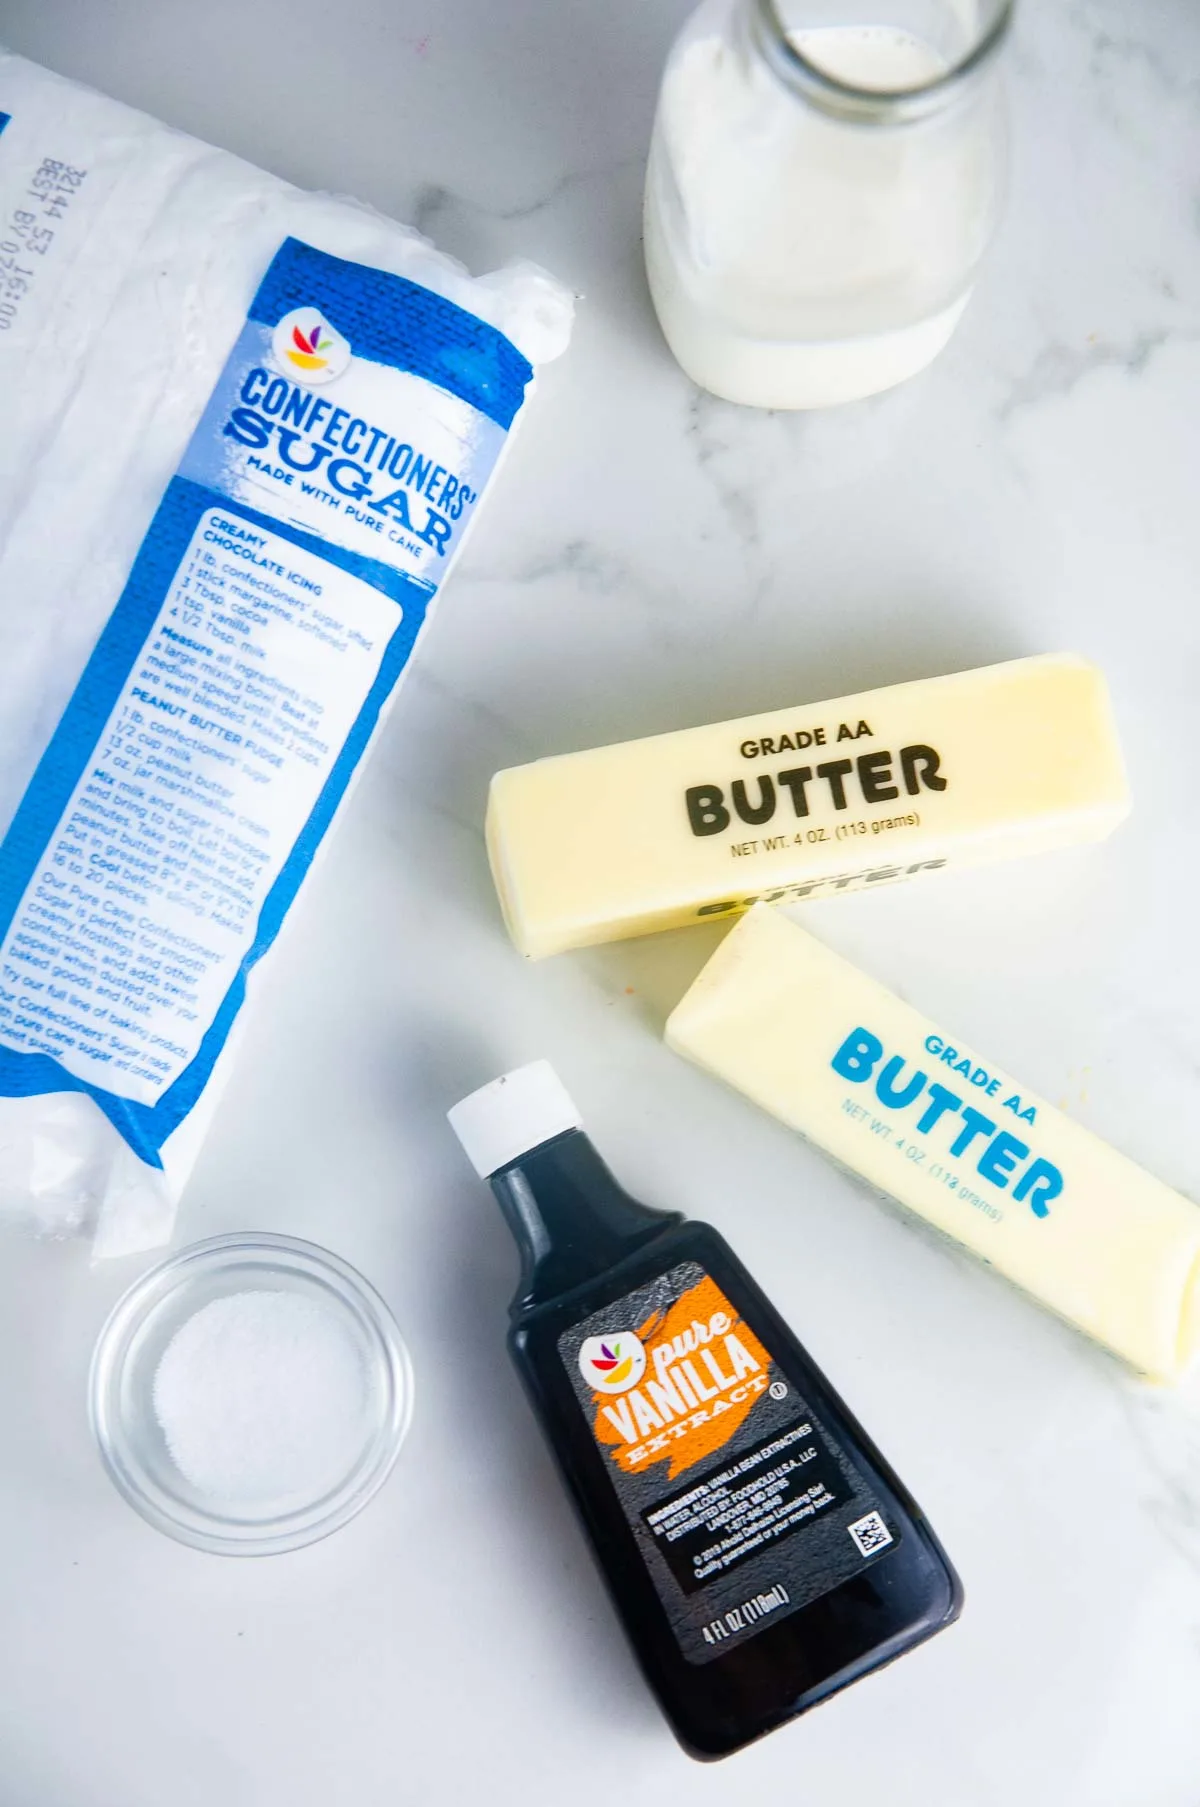 Ingredients for Vanilla Buttercream Icing: Butter, Heavy Cream, Powdered Sugar, Vanilla Extract, Salt